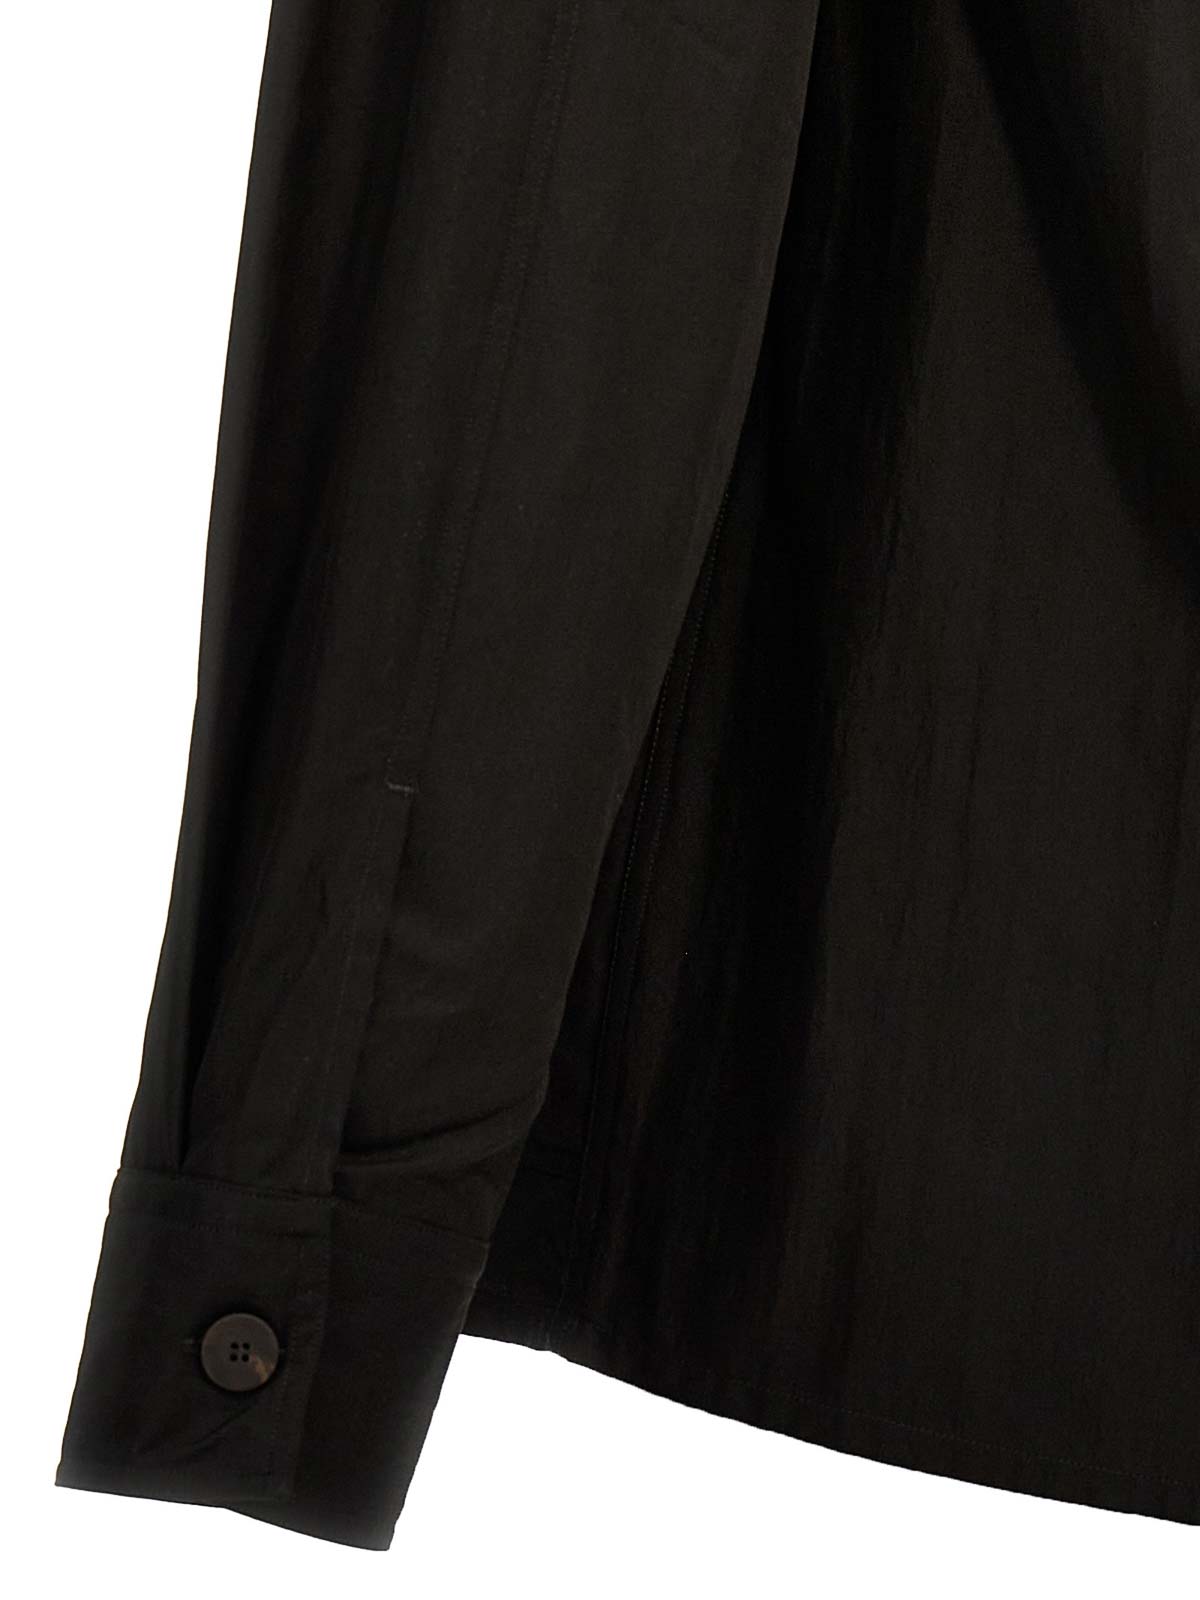 Shop Studio Nicholson Camisa - Negro In Black